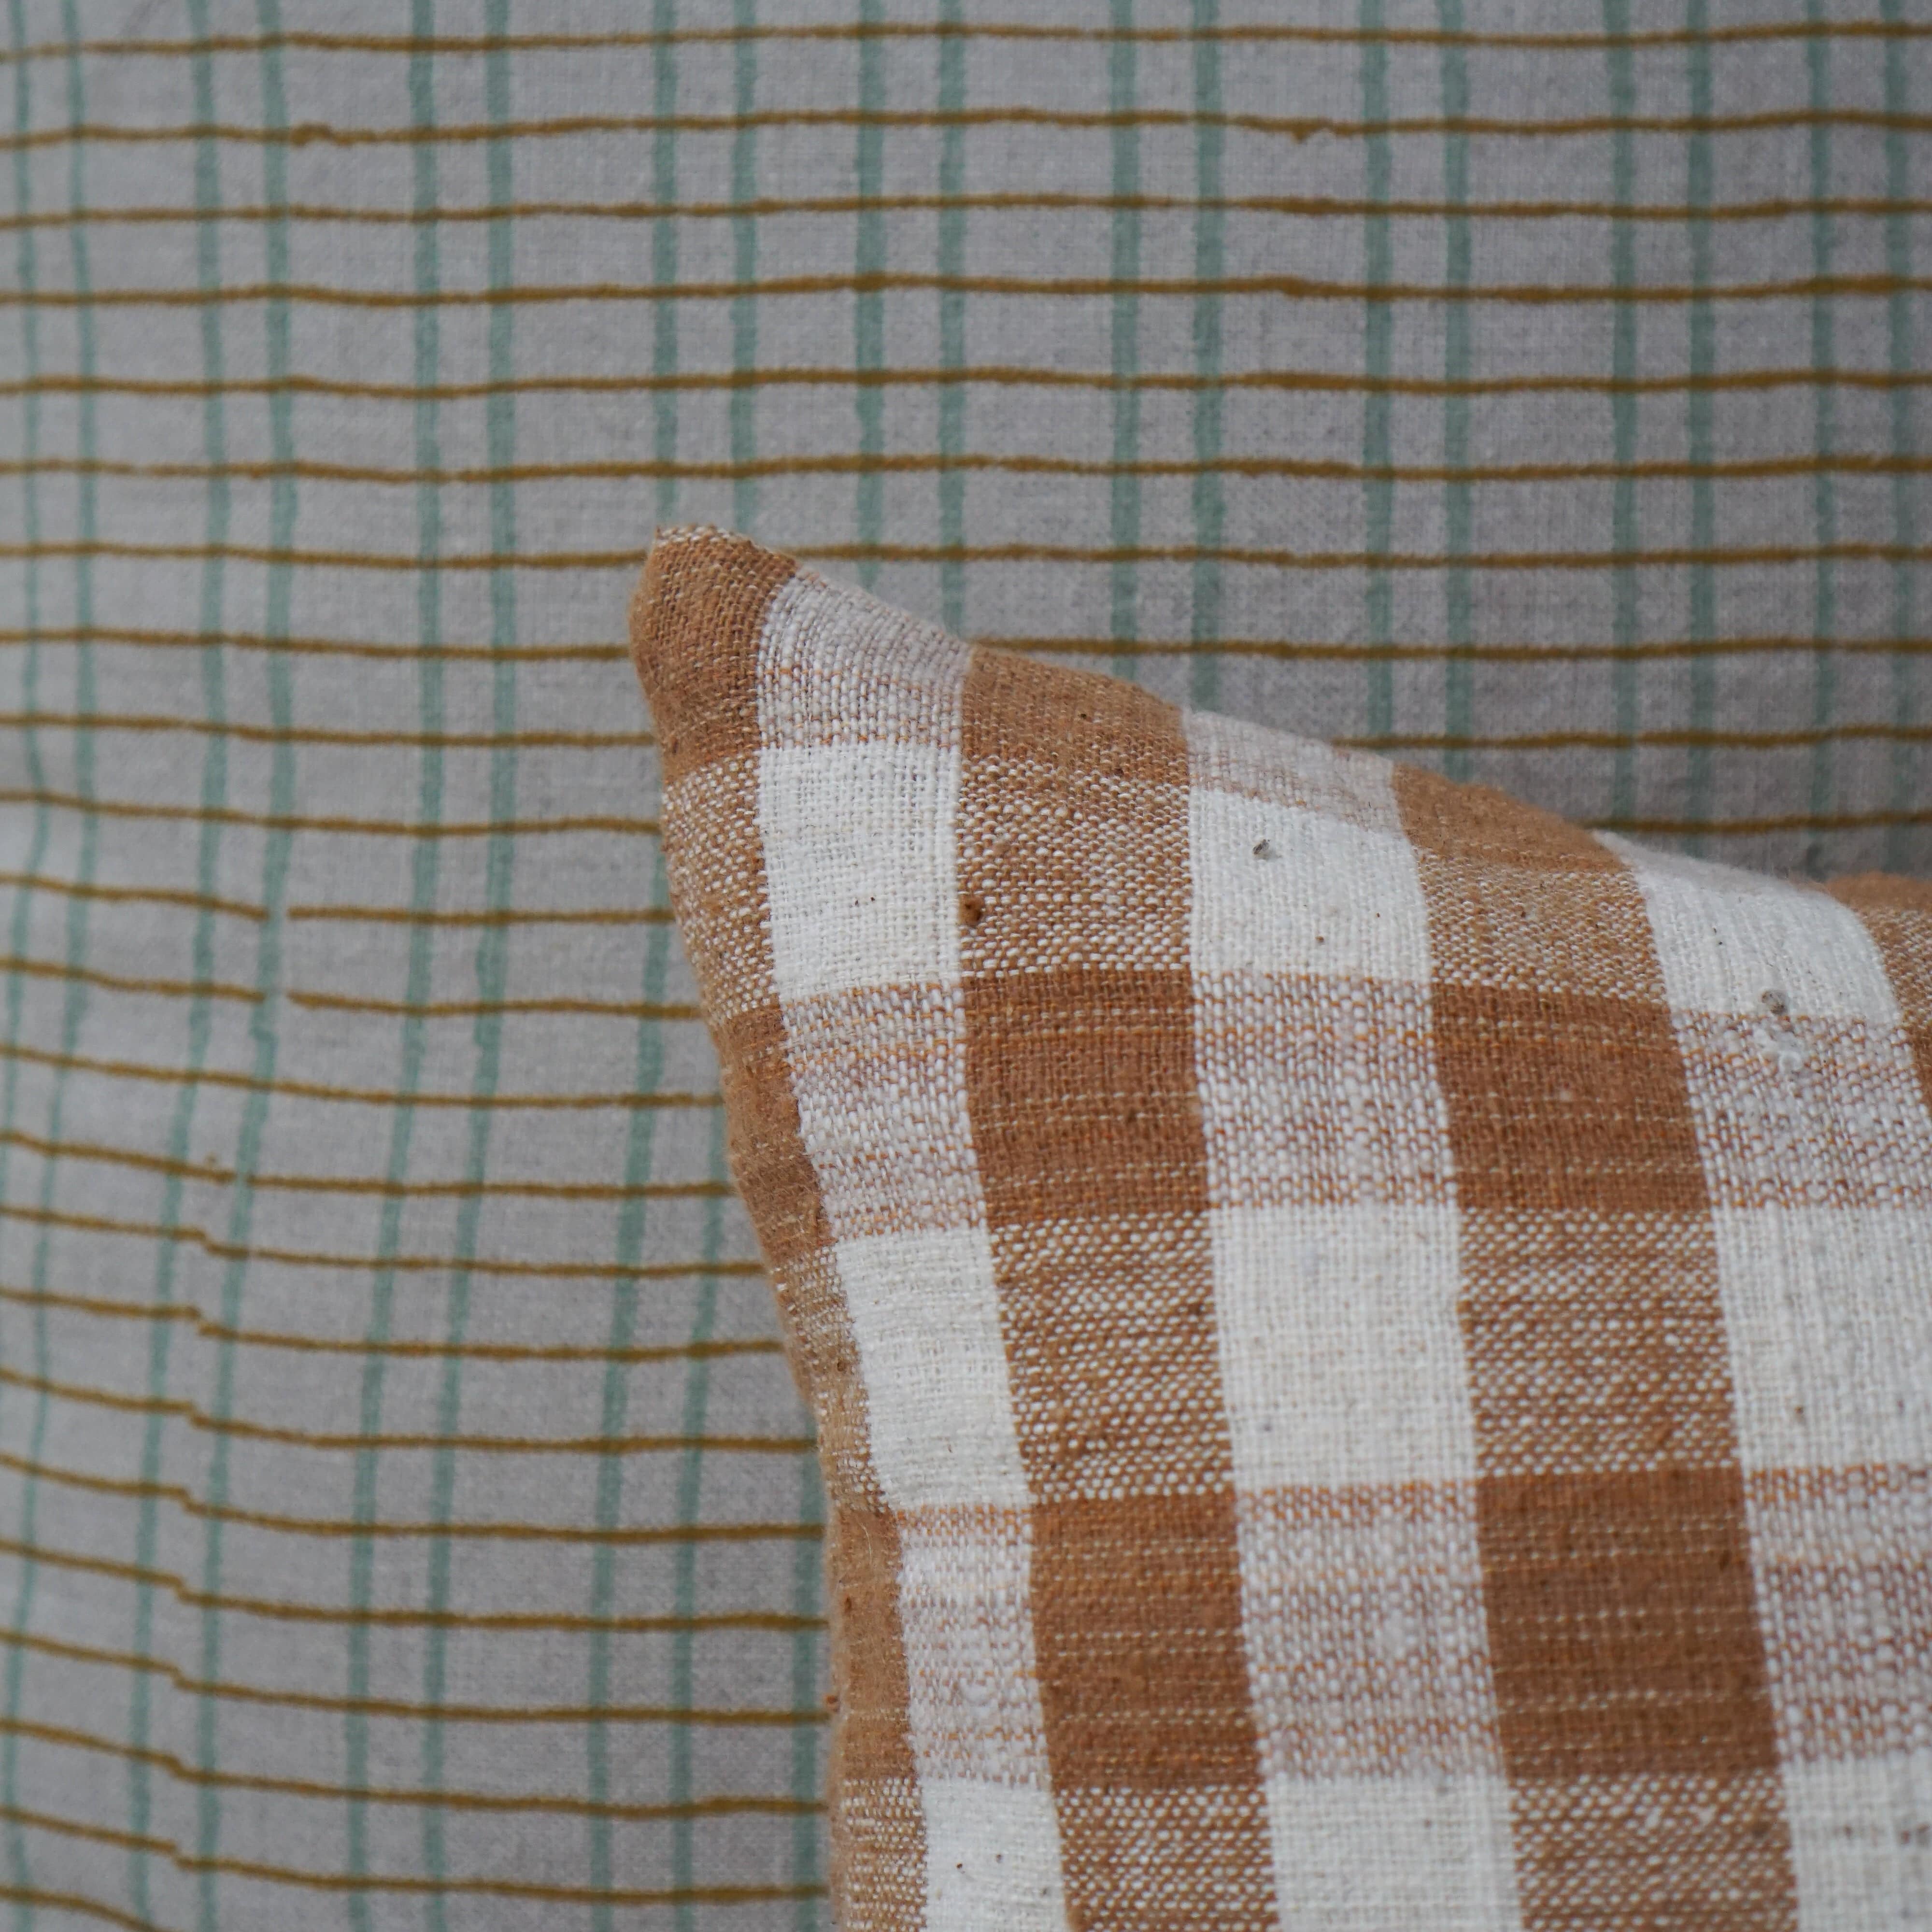 Lineage Botanica Pillows 26" x 14" Cream and Rust Plaid Linen Lumbar Pillow - 23.5 x 12